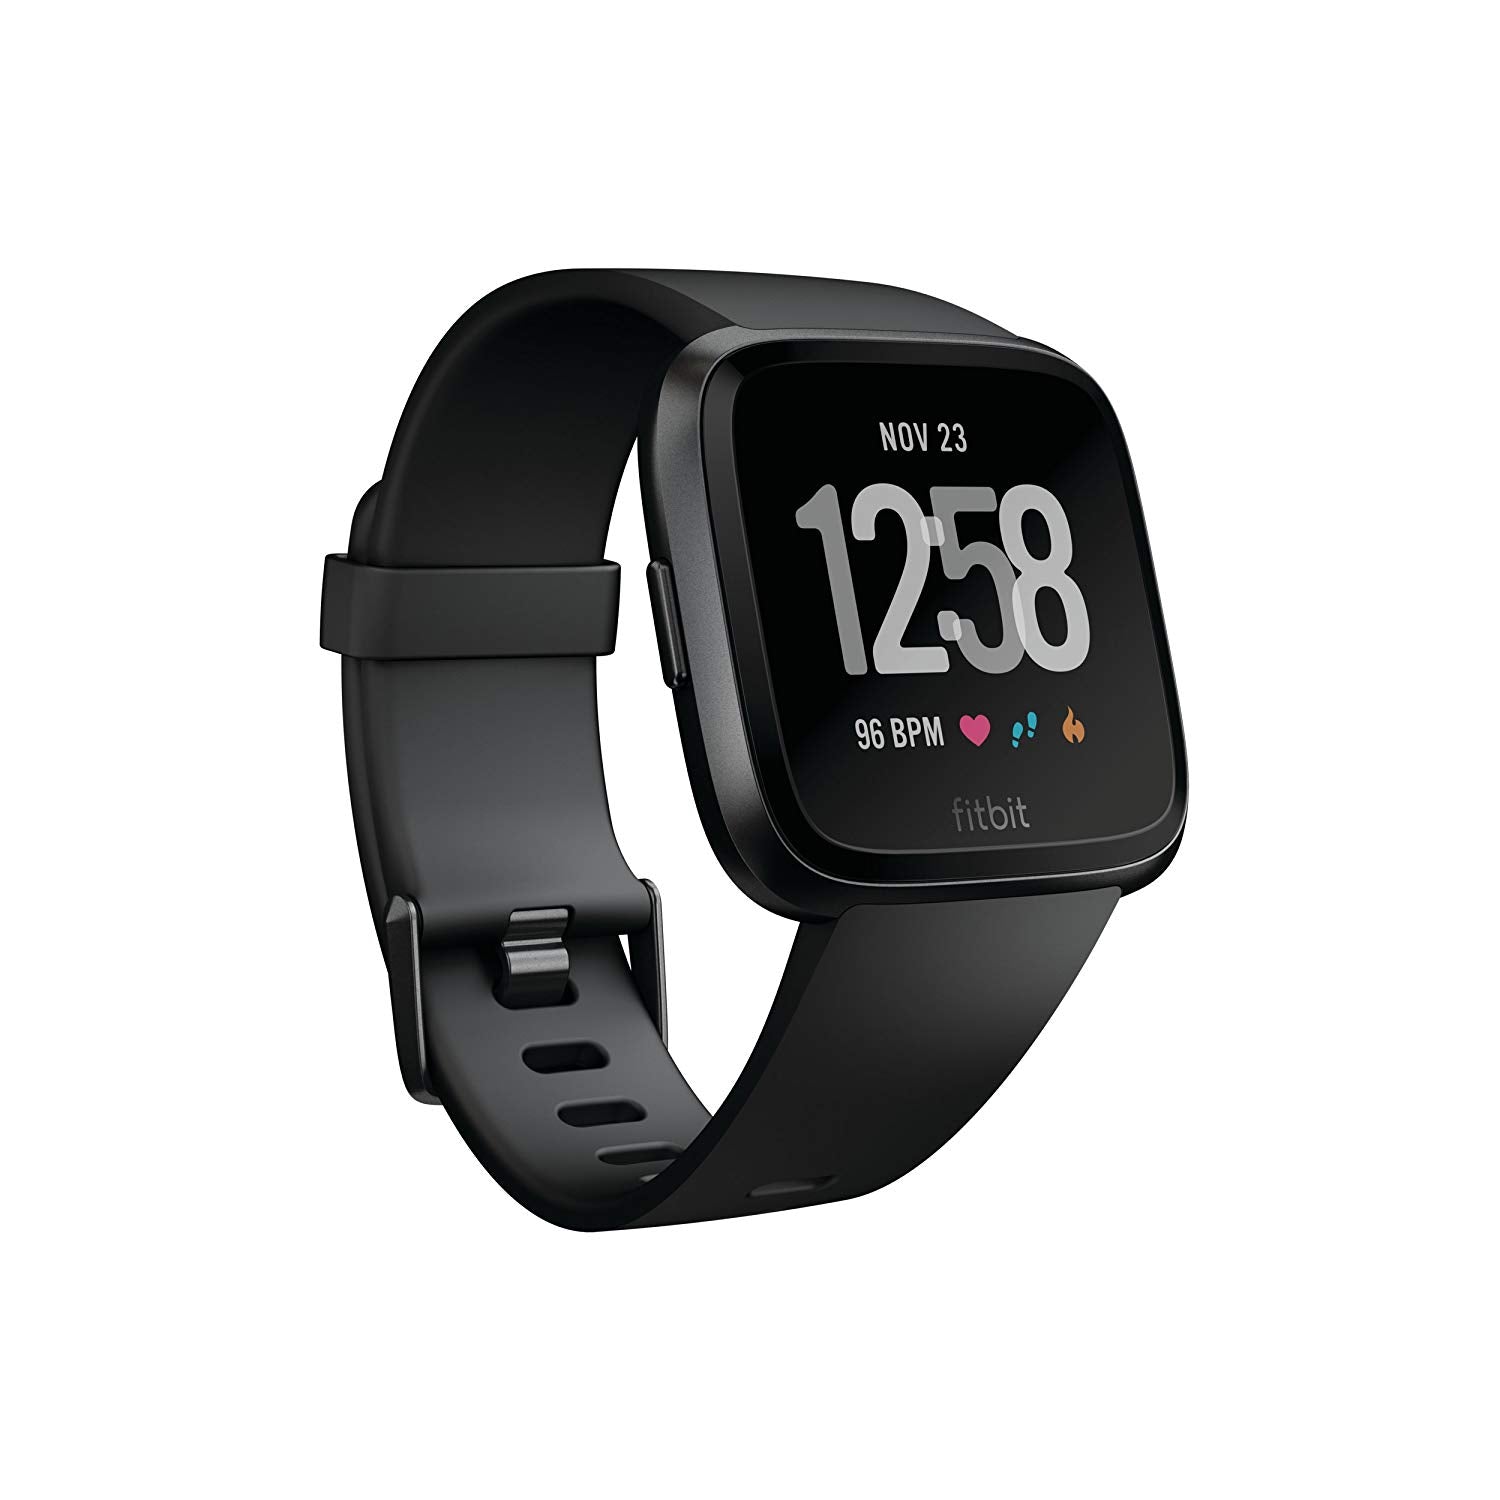 Fitbit Versa Fitness Smartwatch - Black/Carbon (Certified Refurbished)